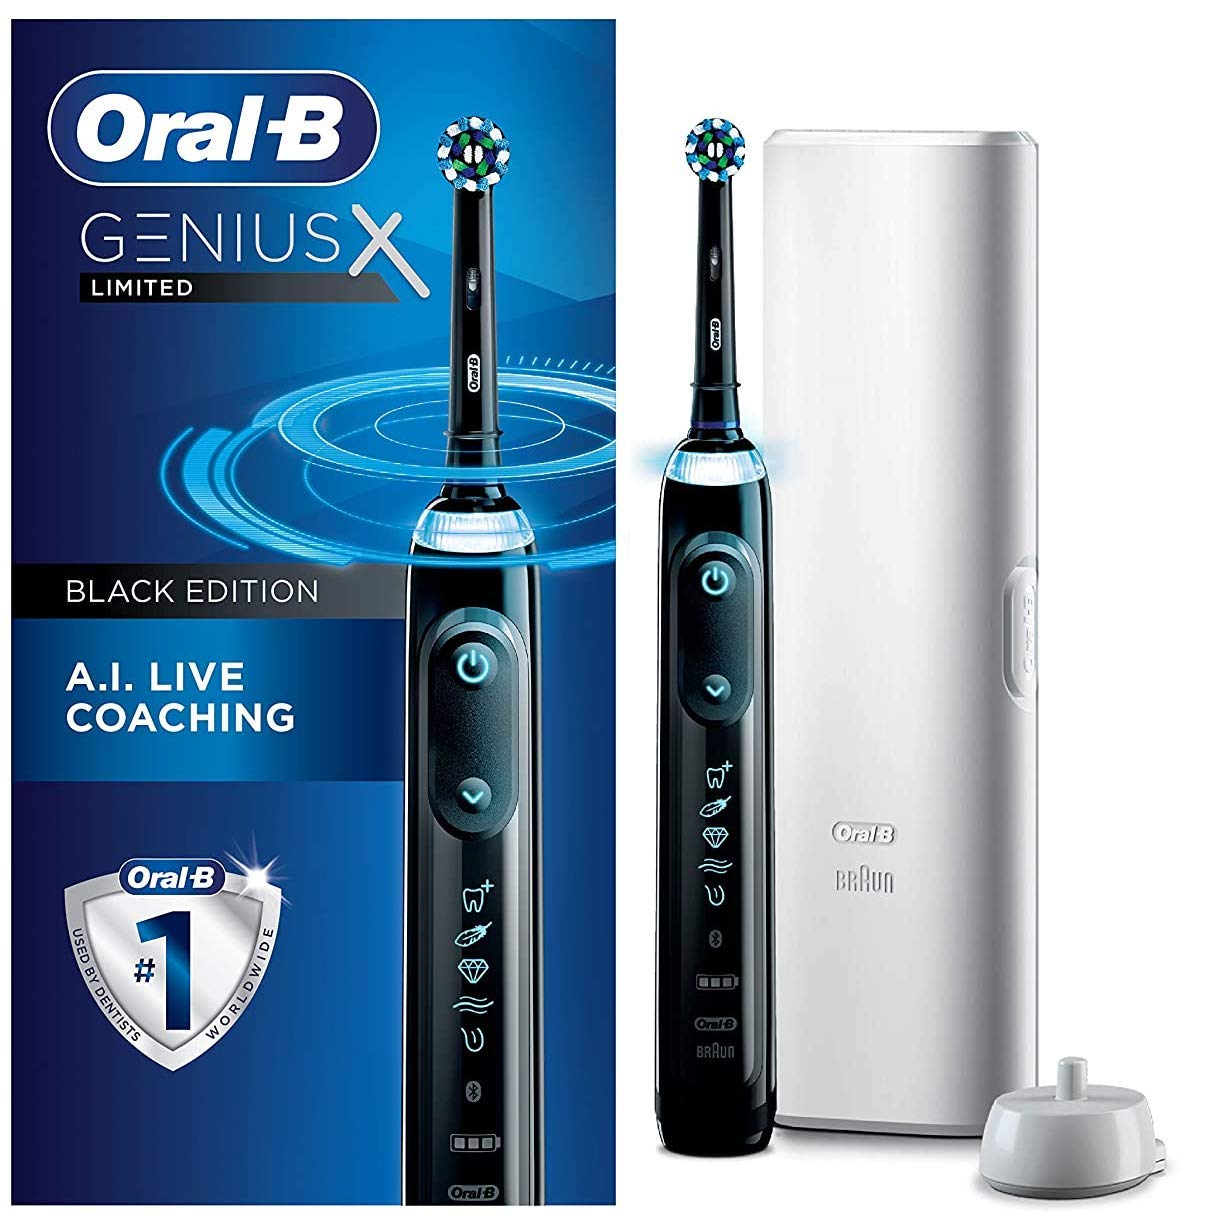 Oral-B Genius X Limited